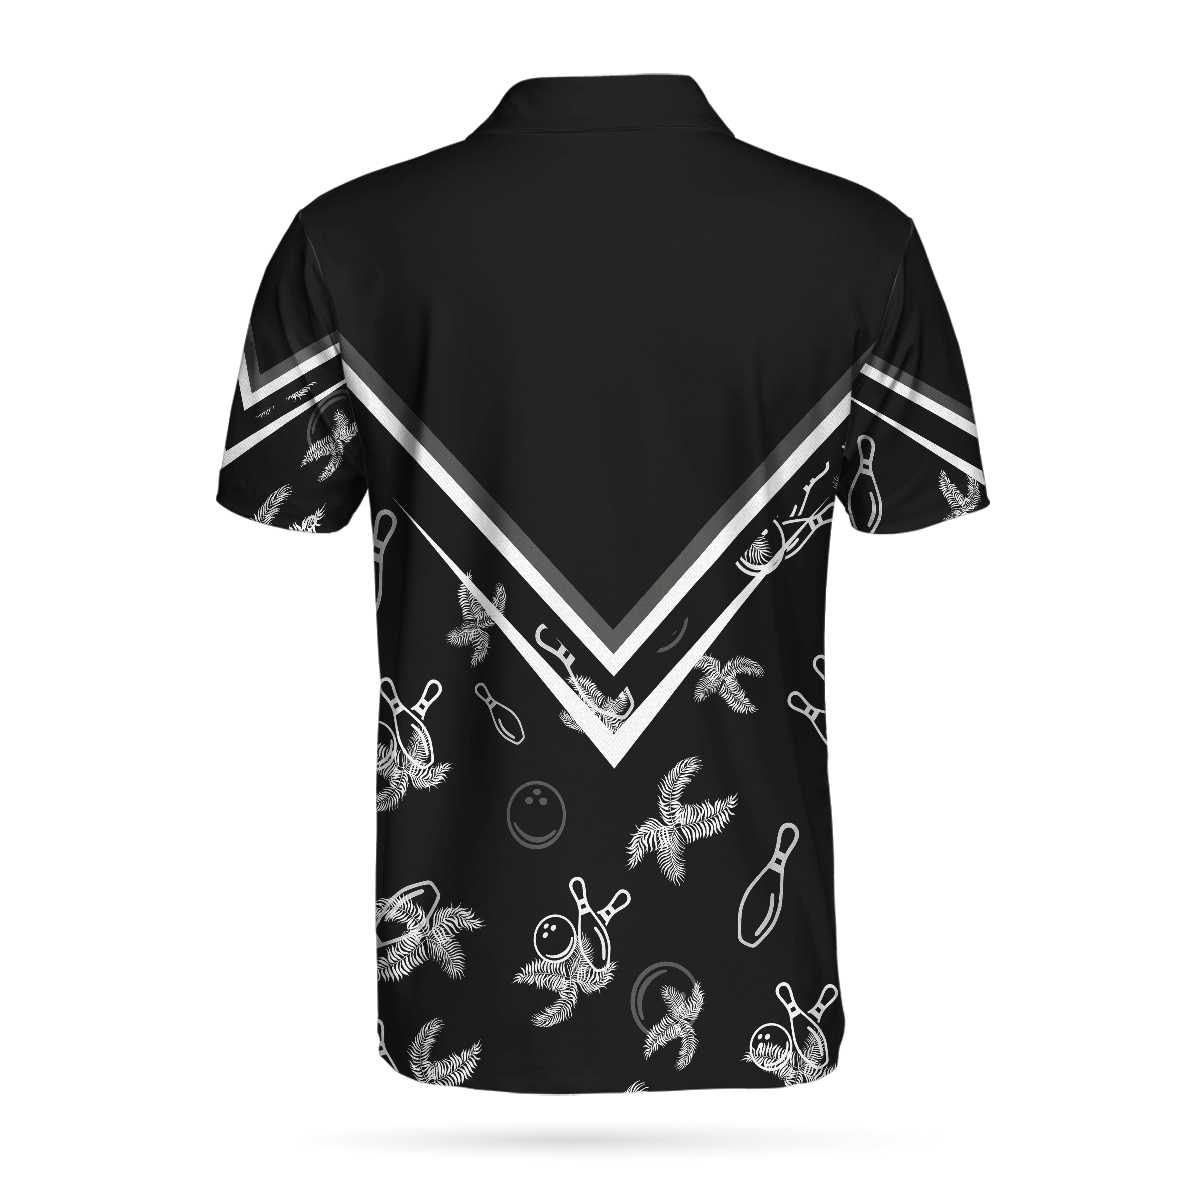 Bowling Monochrome Tropical Pattern Custom Polo Shirt/ Black Bowling Polo Shirt For Bowlers/ Personalized Gift Idea Coolspod